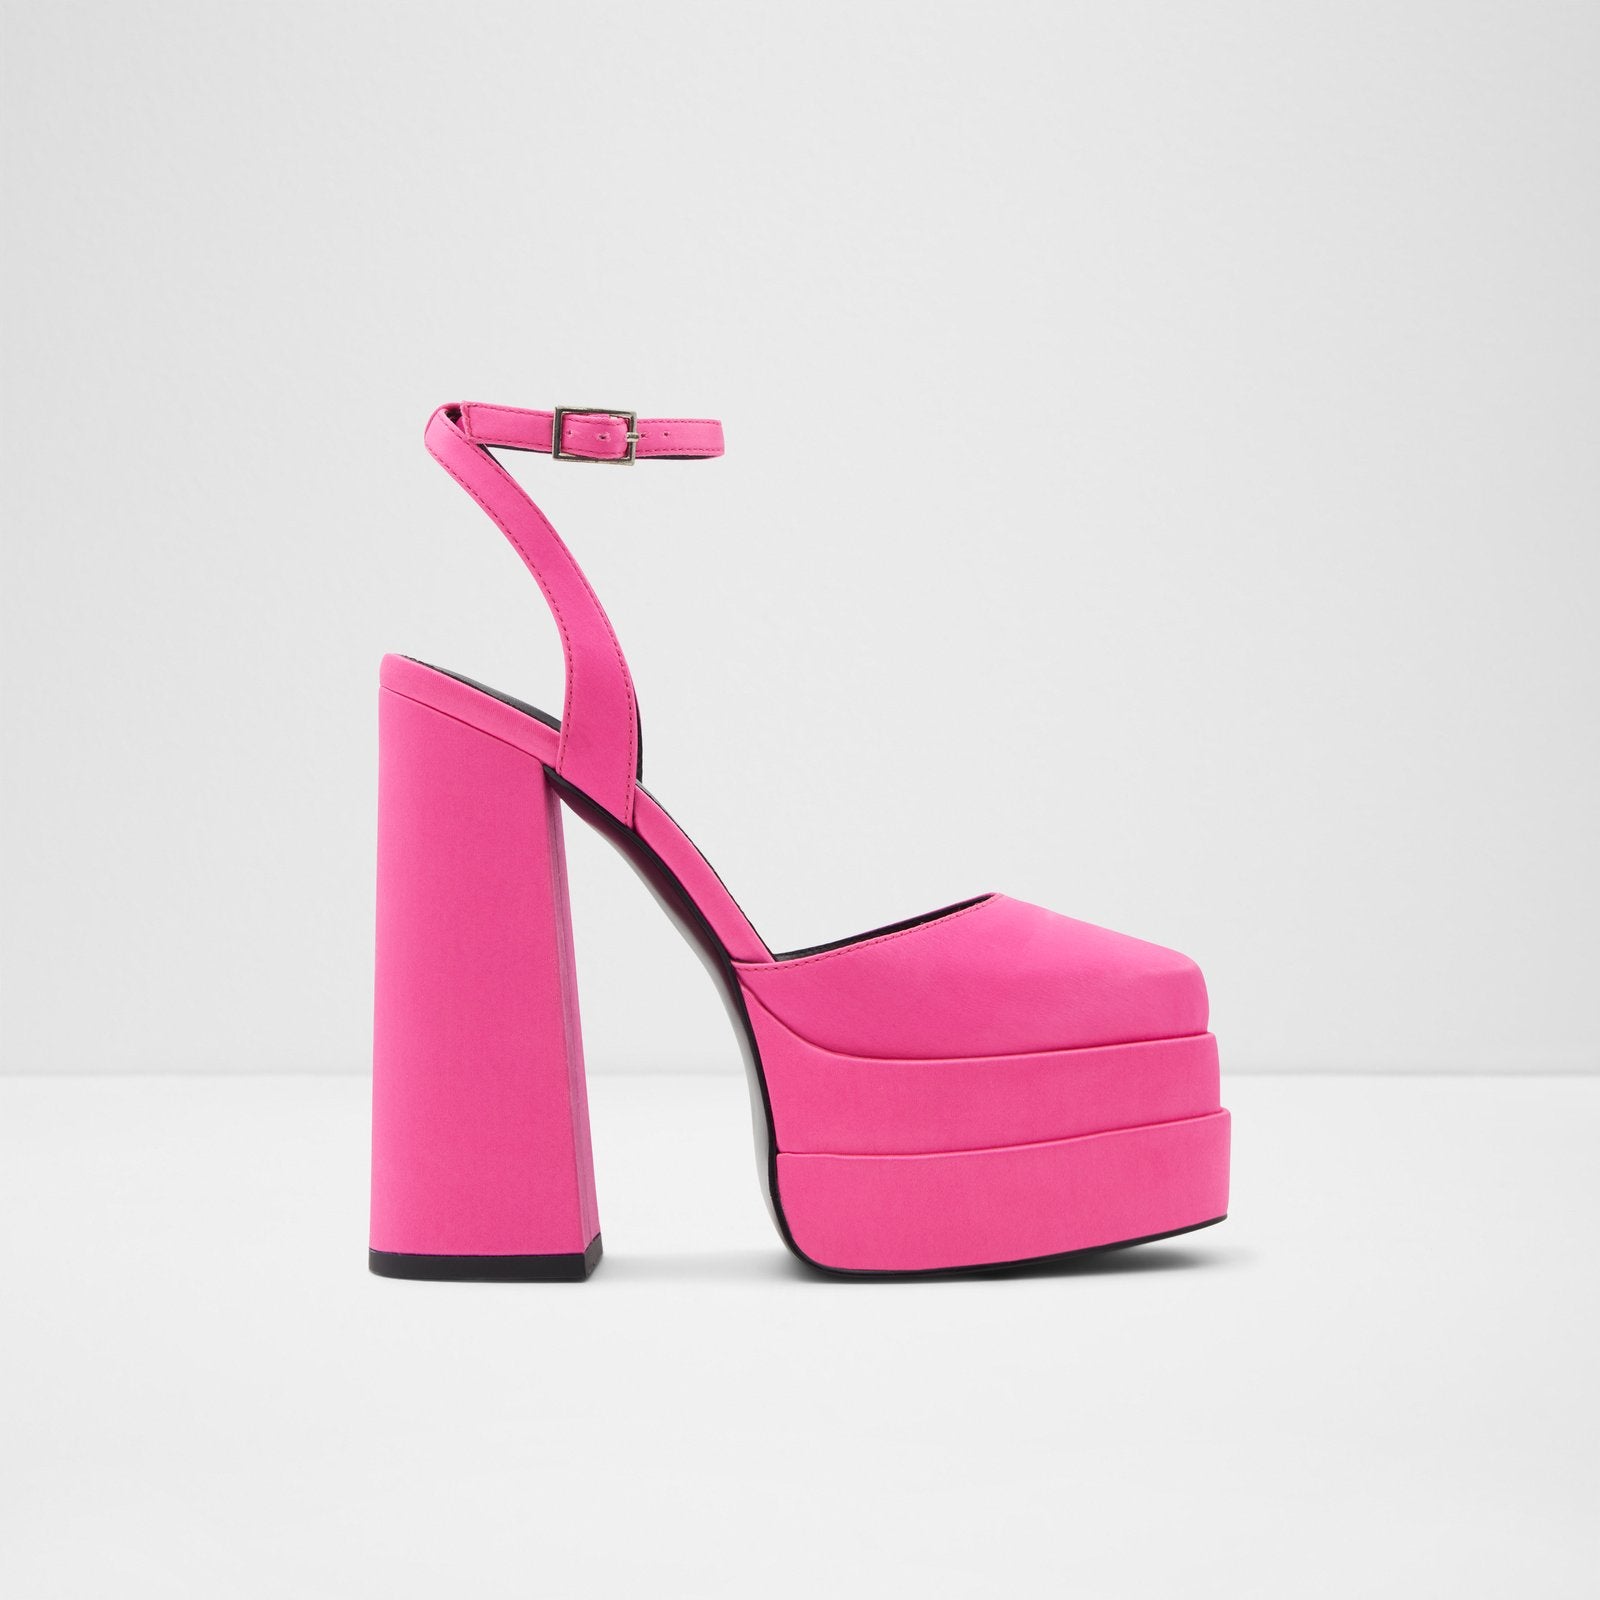 Aldo Women’s Heeled Shoes Kersaudy (Bright Pink)